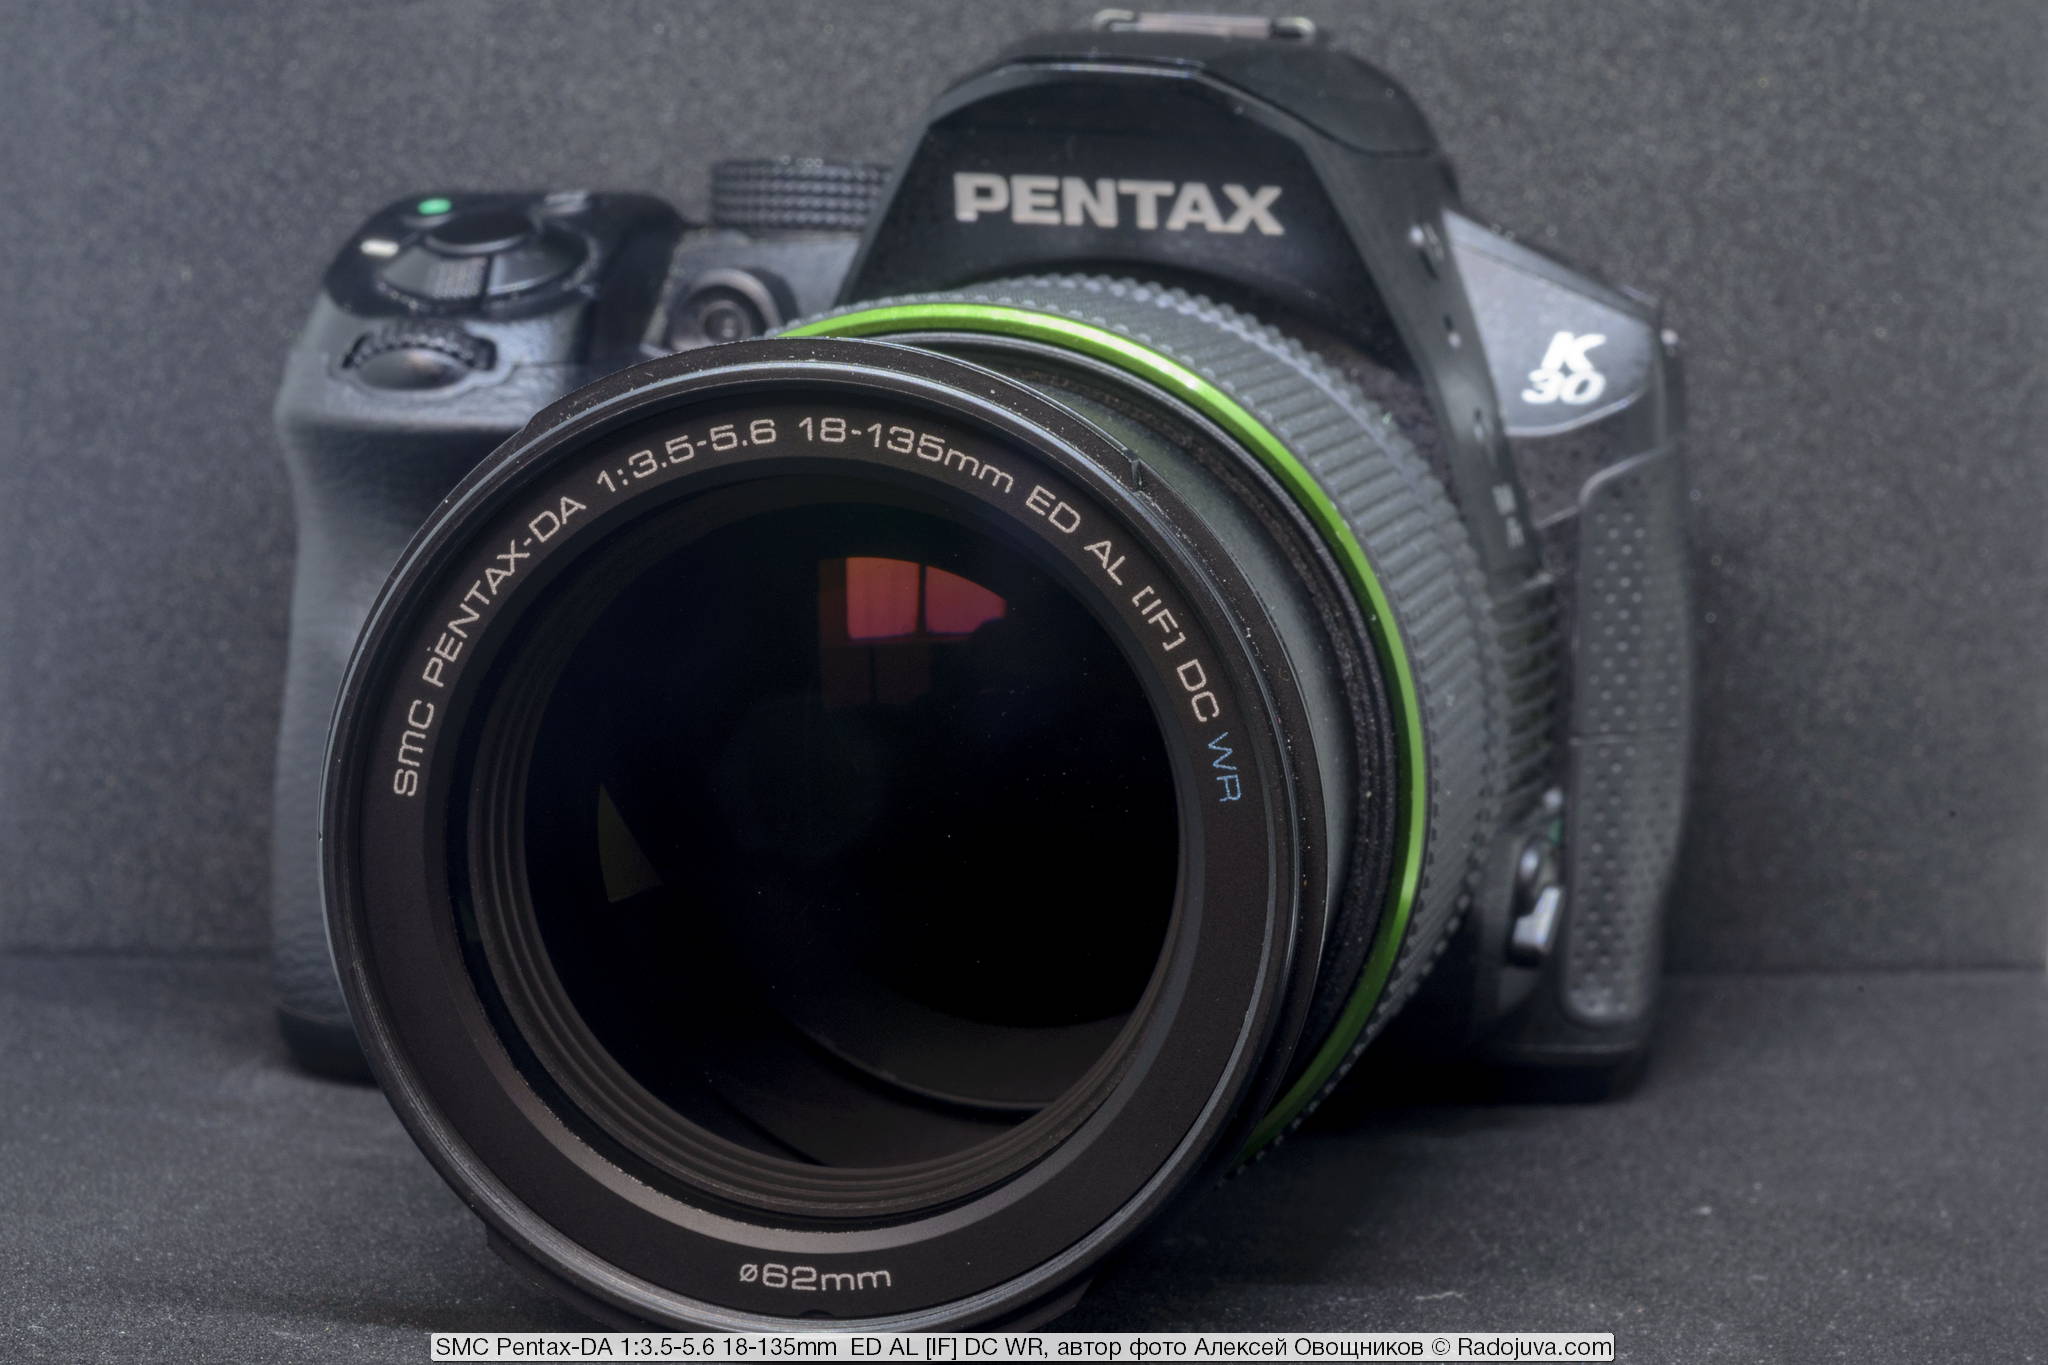 SMC Pentax-DA 1: 3.5-5.6 18-135mm ED AL [IF] DC WR. Review from 